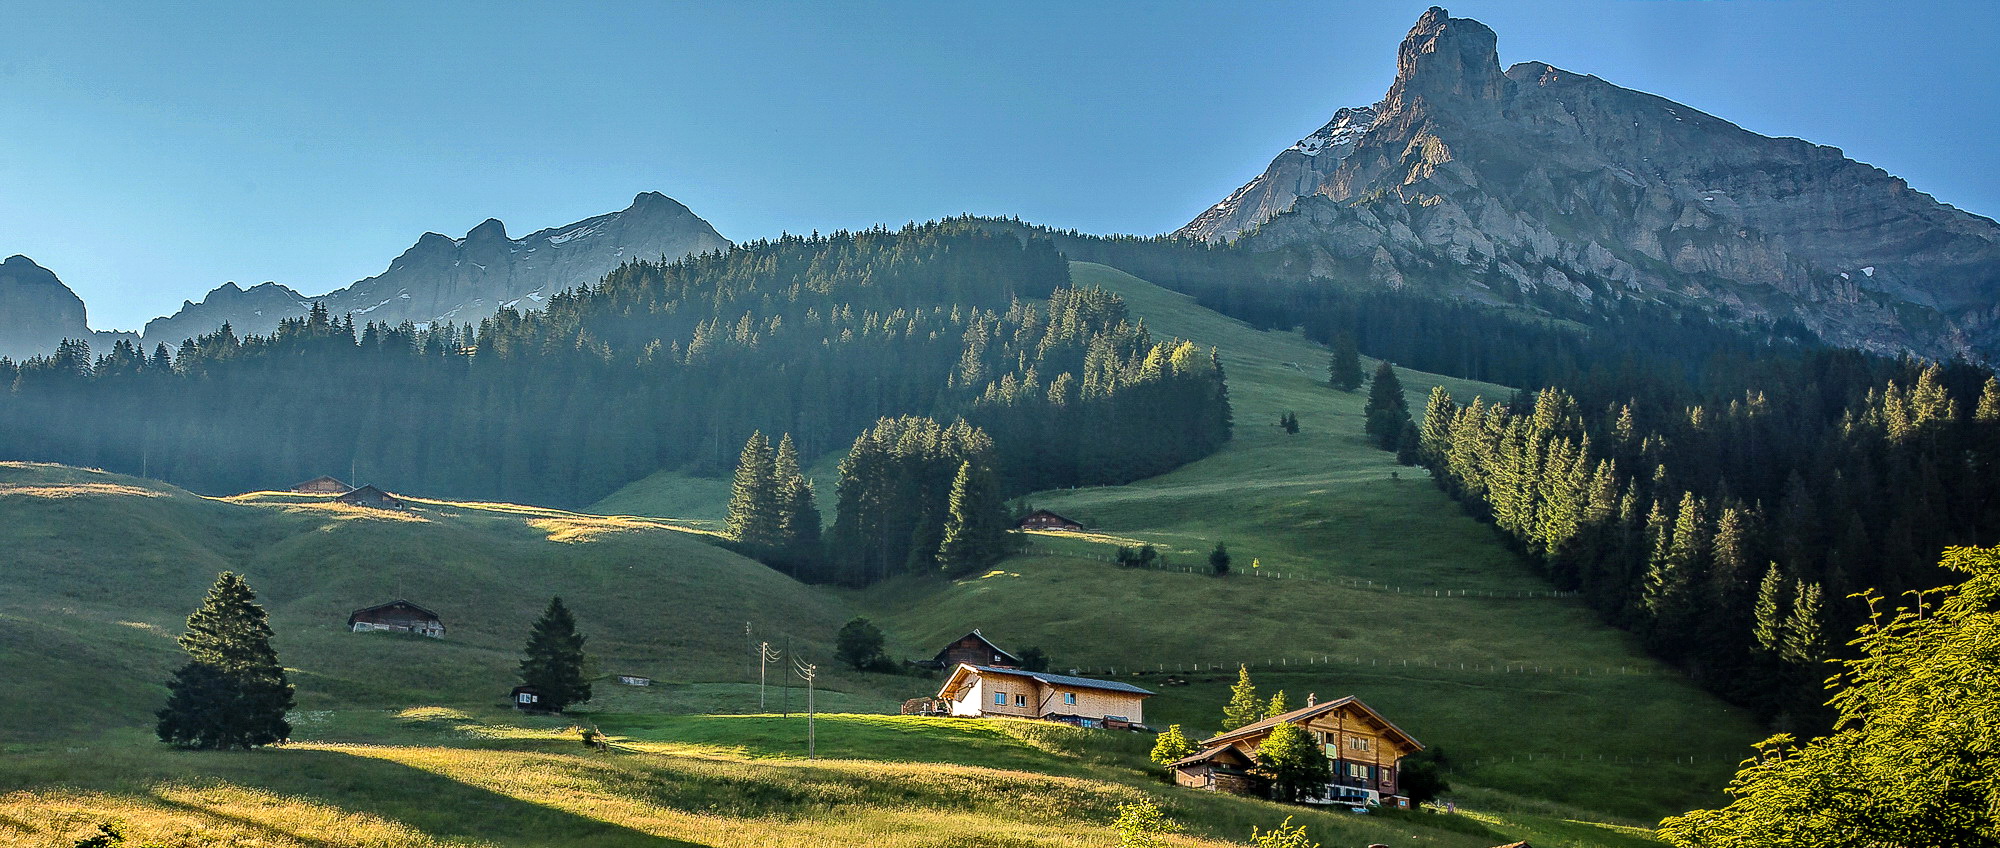 The Alps 2014 Switzerland Adelboden 1